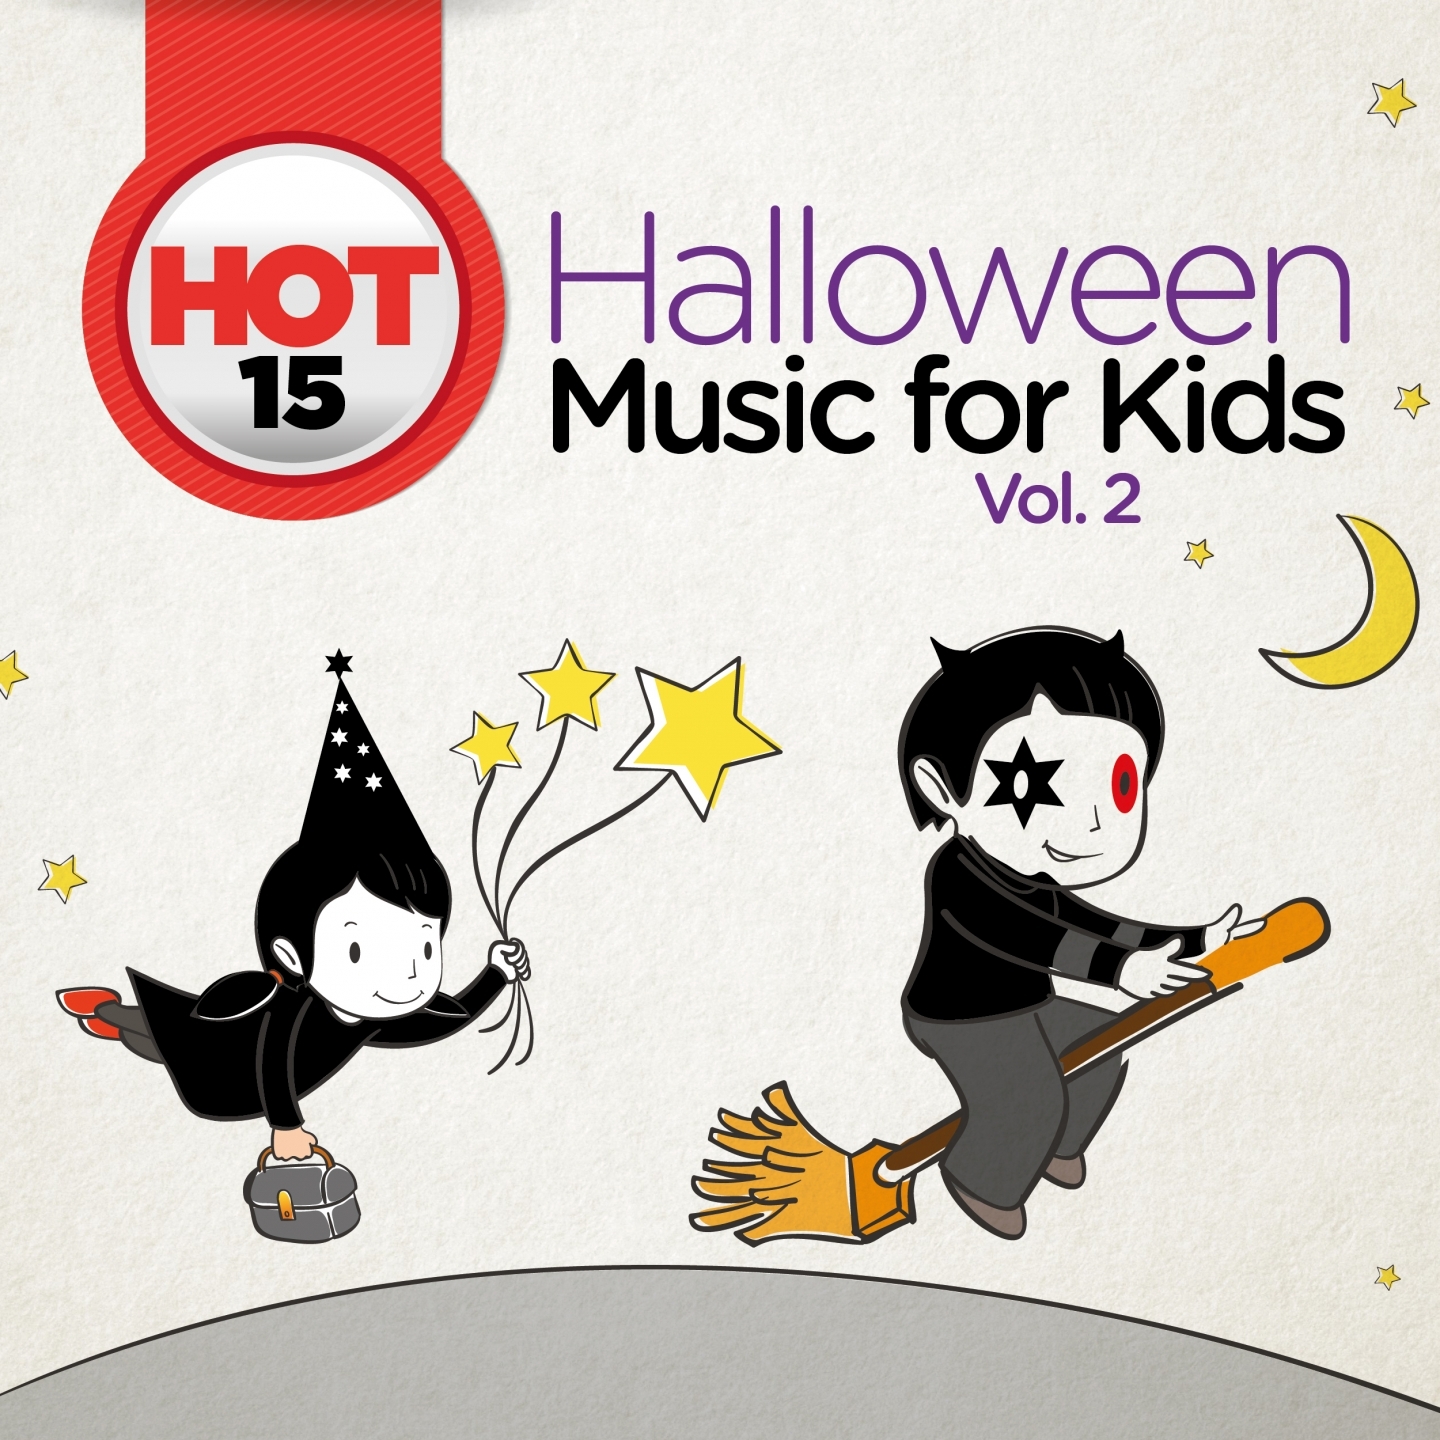 Hot 15 Halloween Music for Kids, Vol. 2